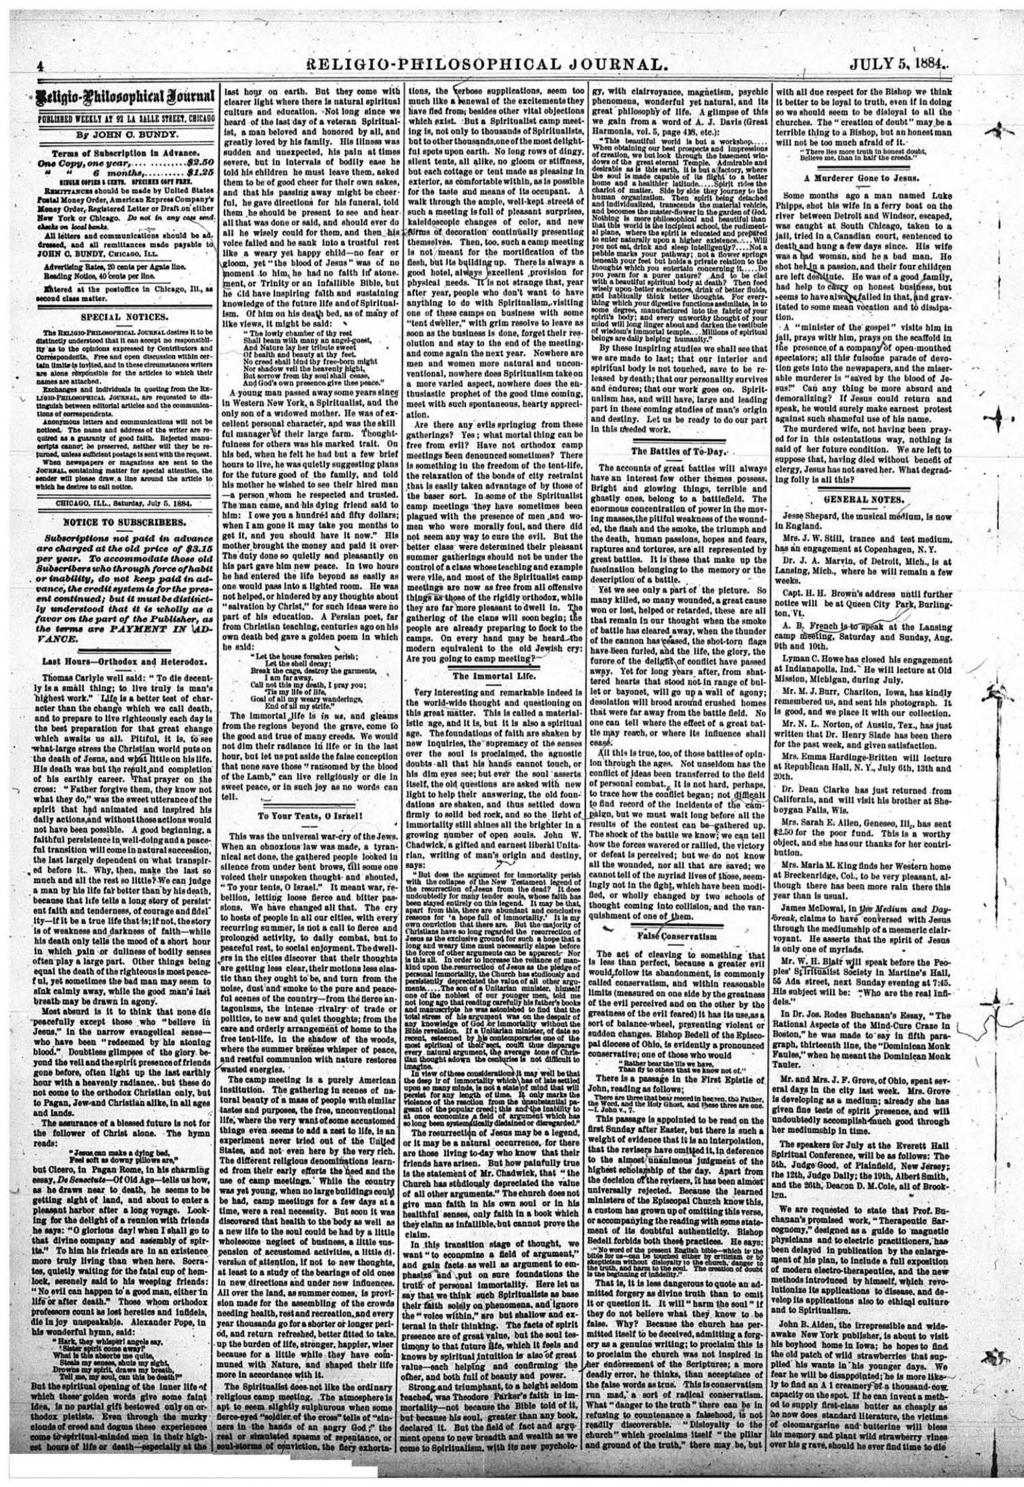 r IELIGIO-PHILOSOPHICAL JOURNAL. JULY 5,1884., -L- * I M i f li ö - f hilouaphinü onxm \ robluied WLEILT IT 91 Li SALLE STBEET. C3ICÍ0Ü By JOHN O. BUNDY- Terms of Subscription in Advance.